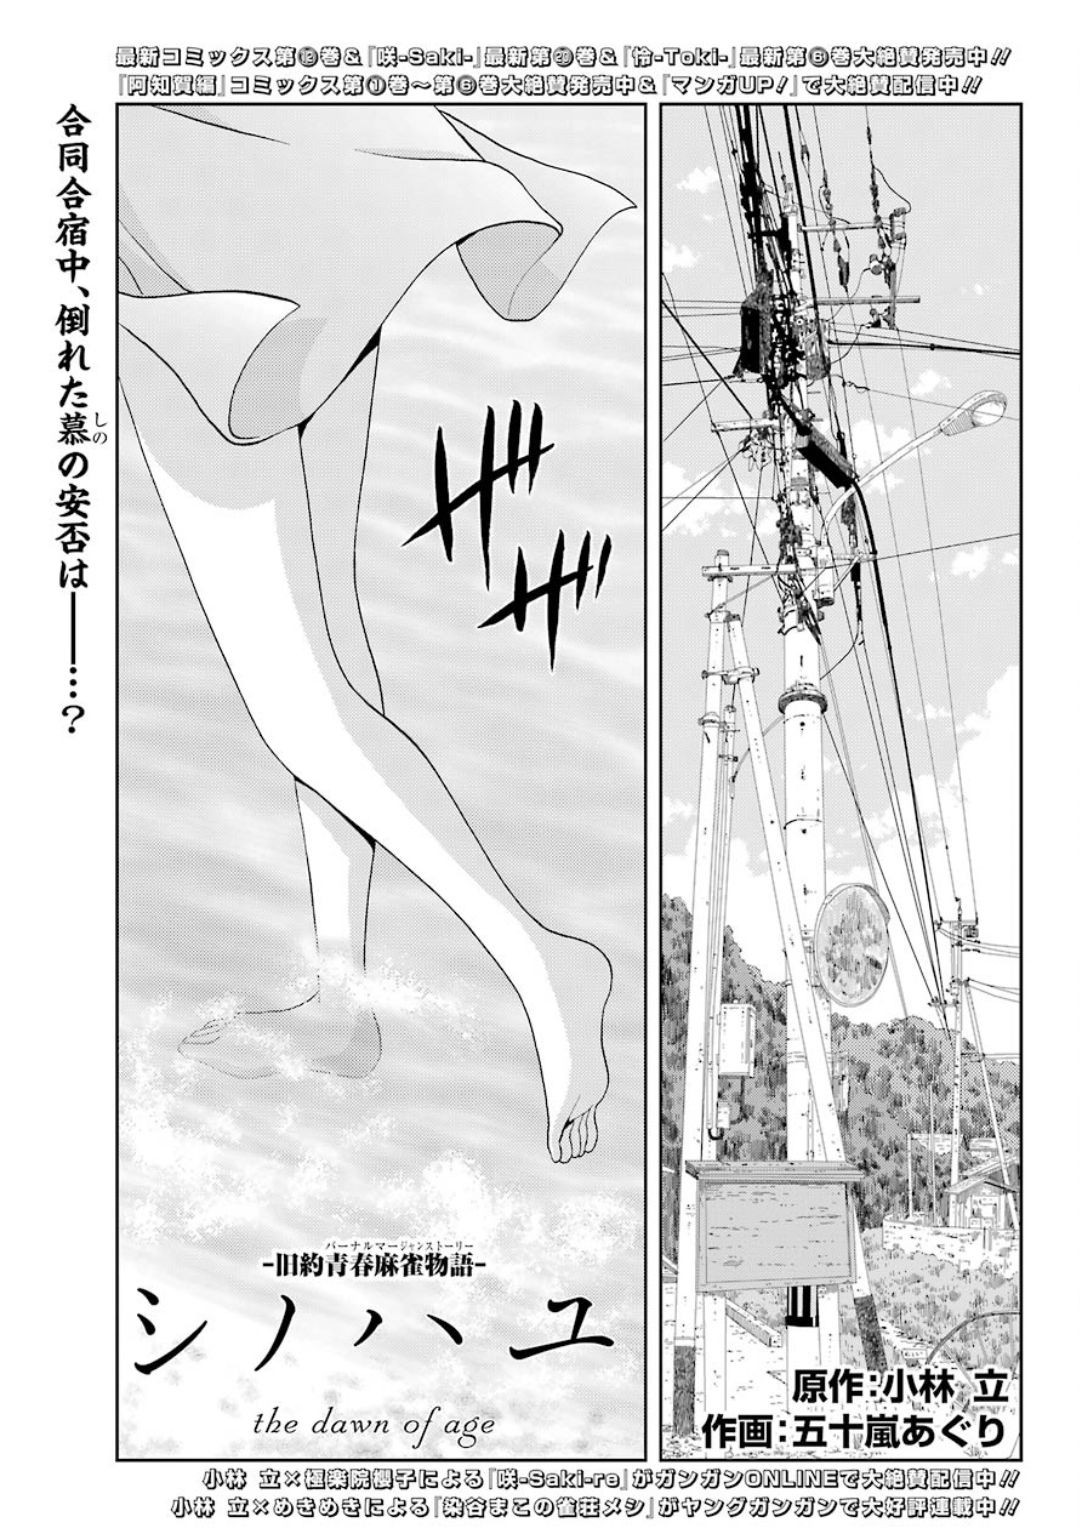 Shinohayu - The Dawn of Age Manga - Chapter 078 - Page 1